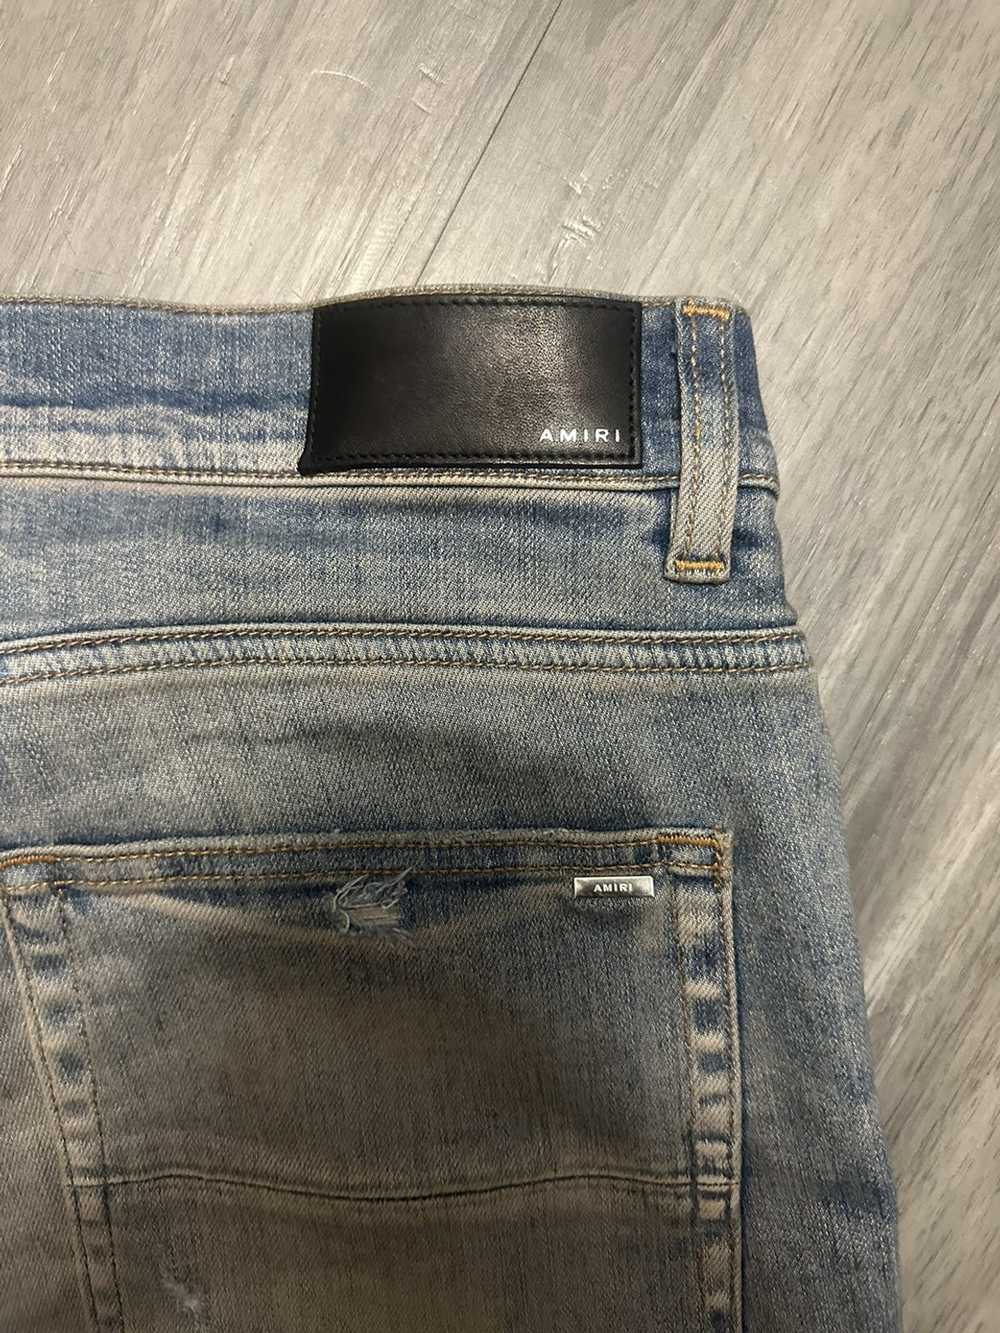 Amiri Amiri Jeans MX1 jeans - image 6